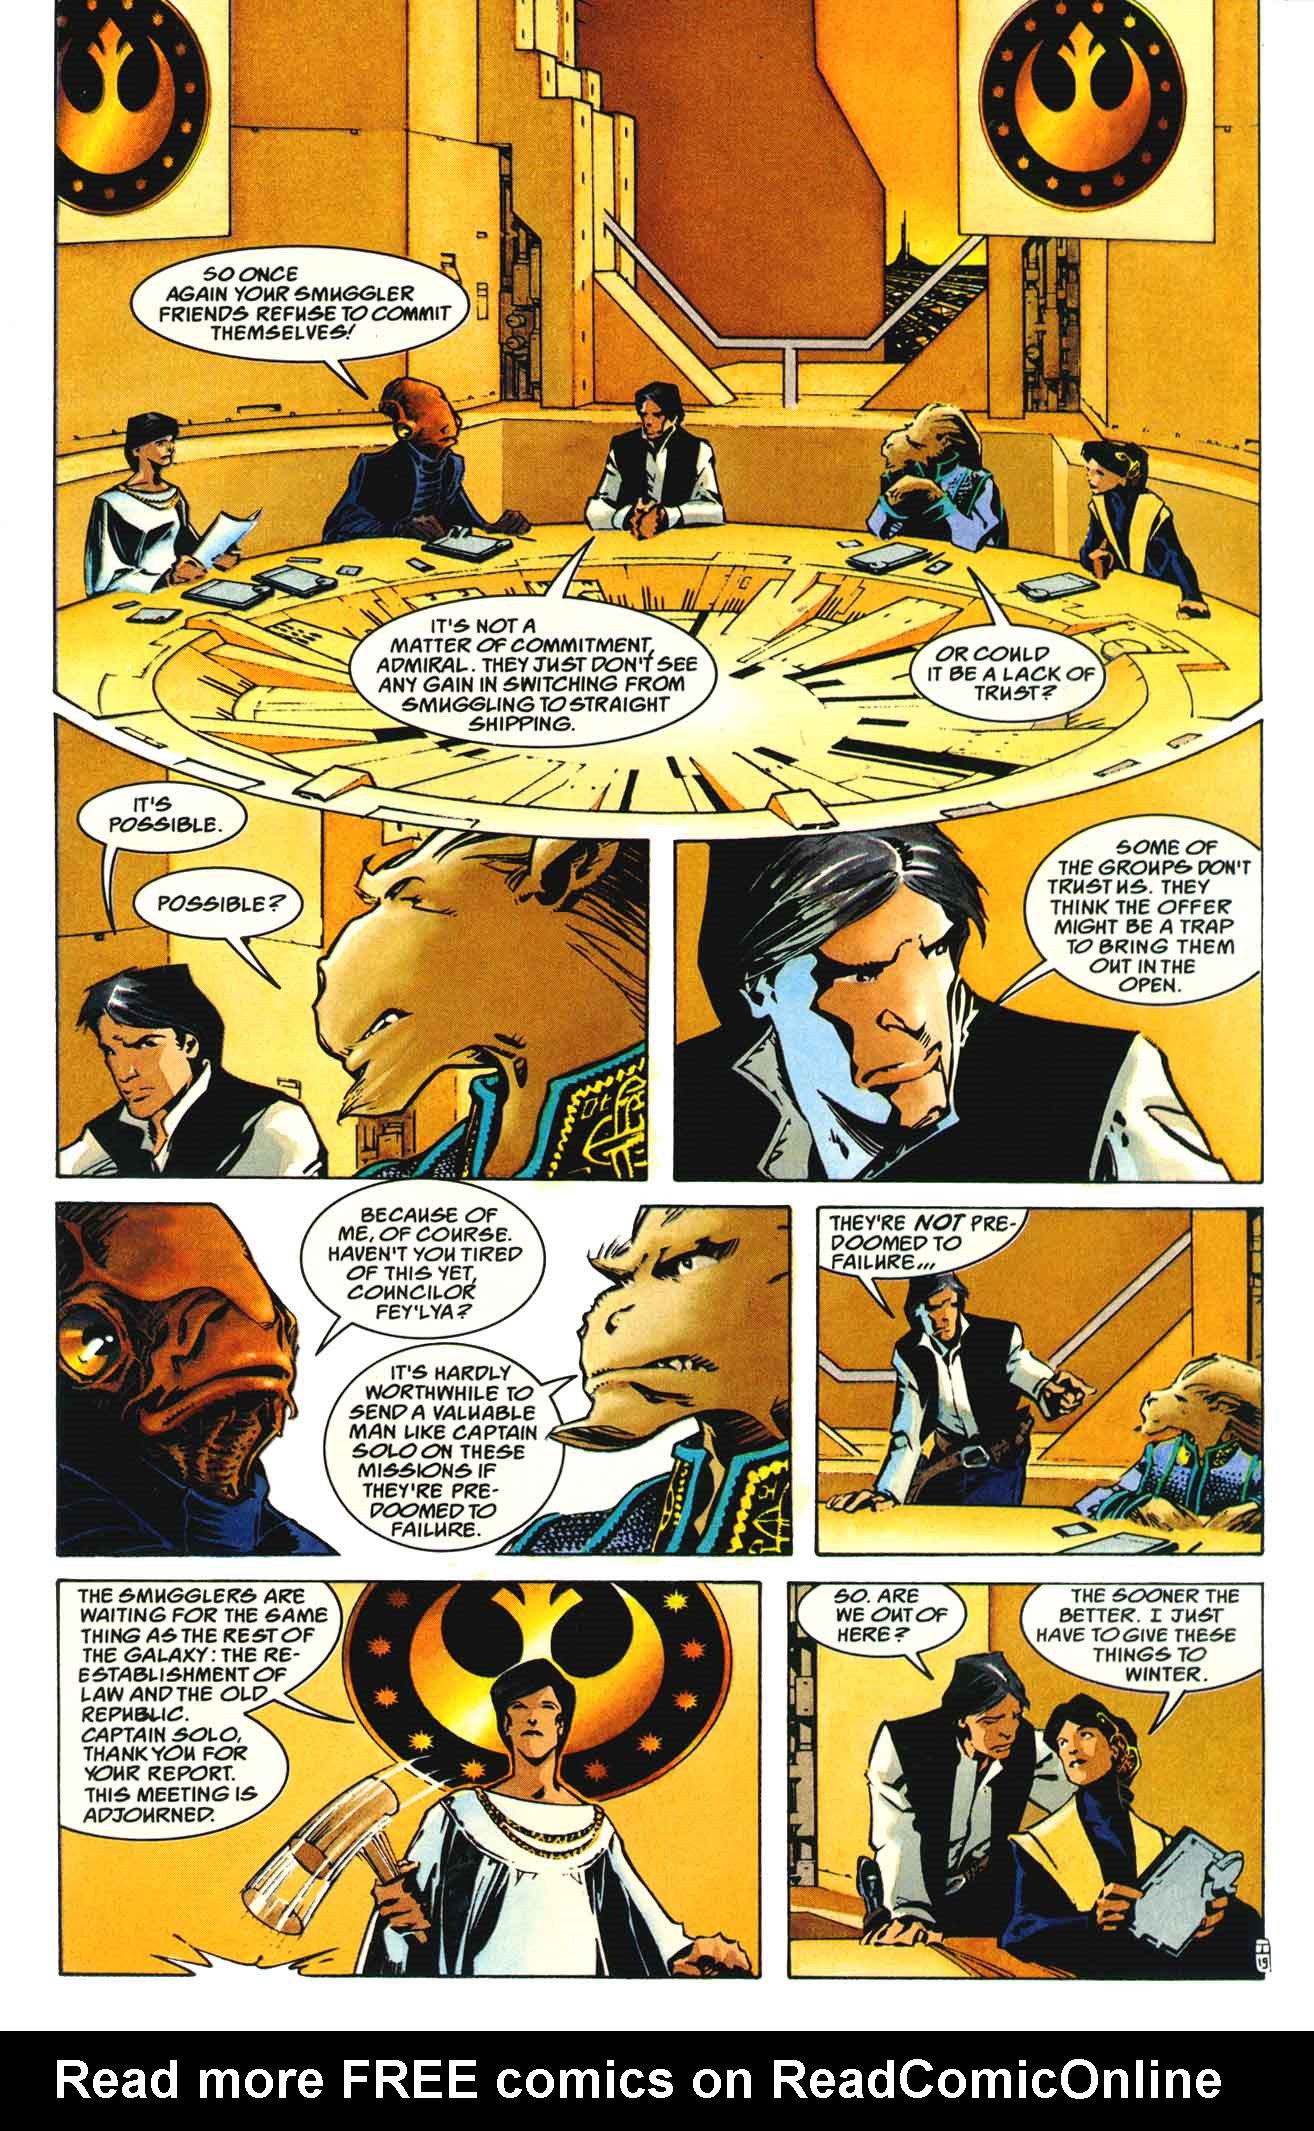 Heir to the empire comic pdf